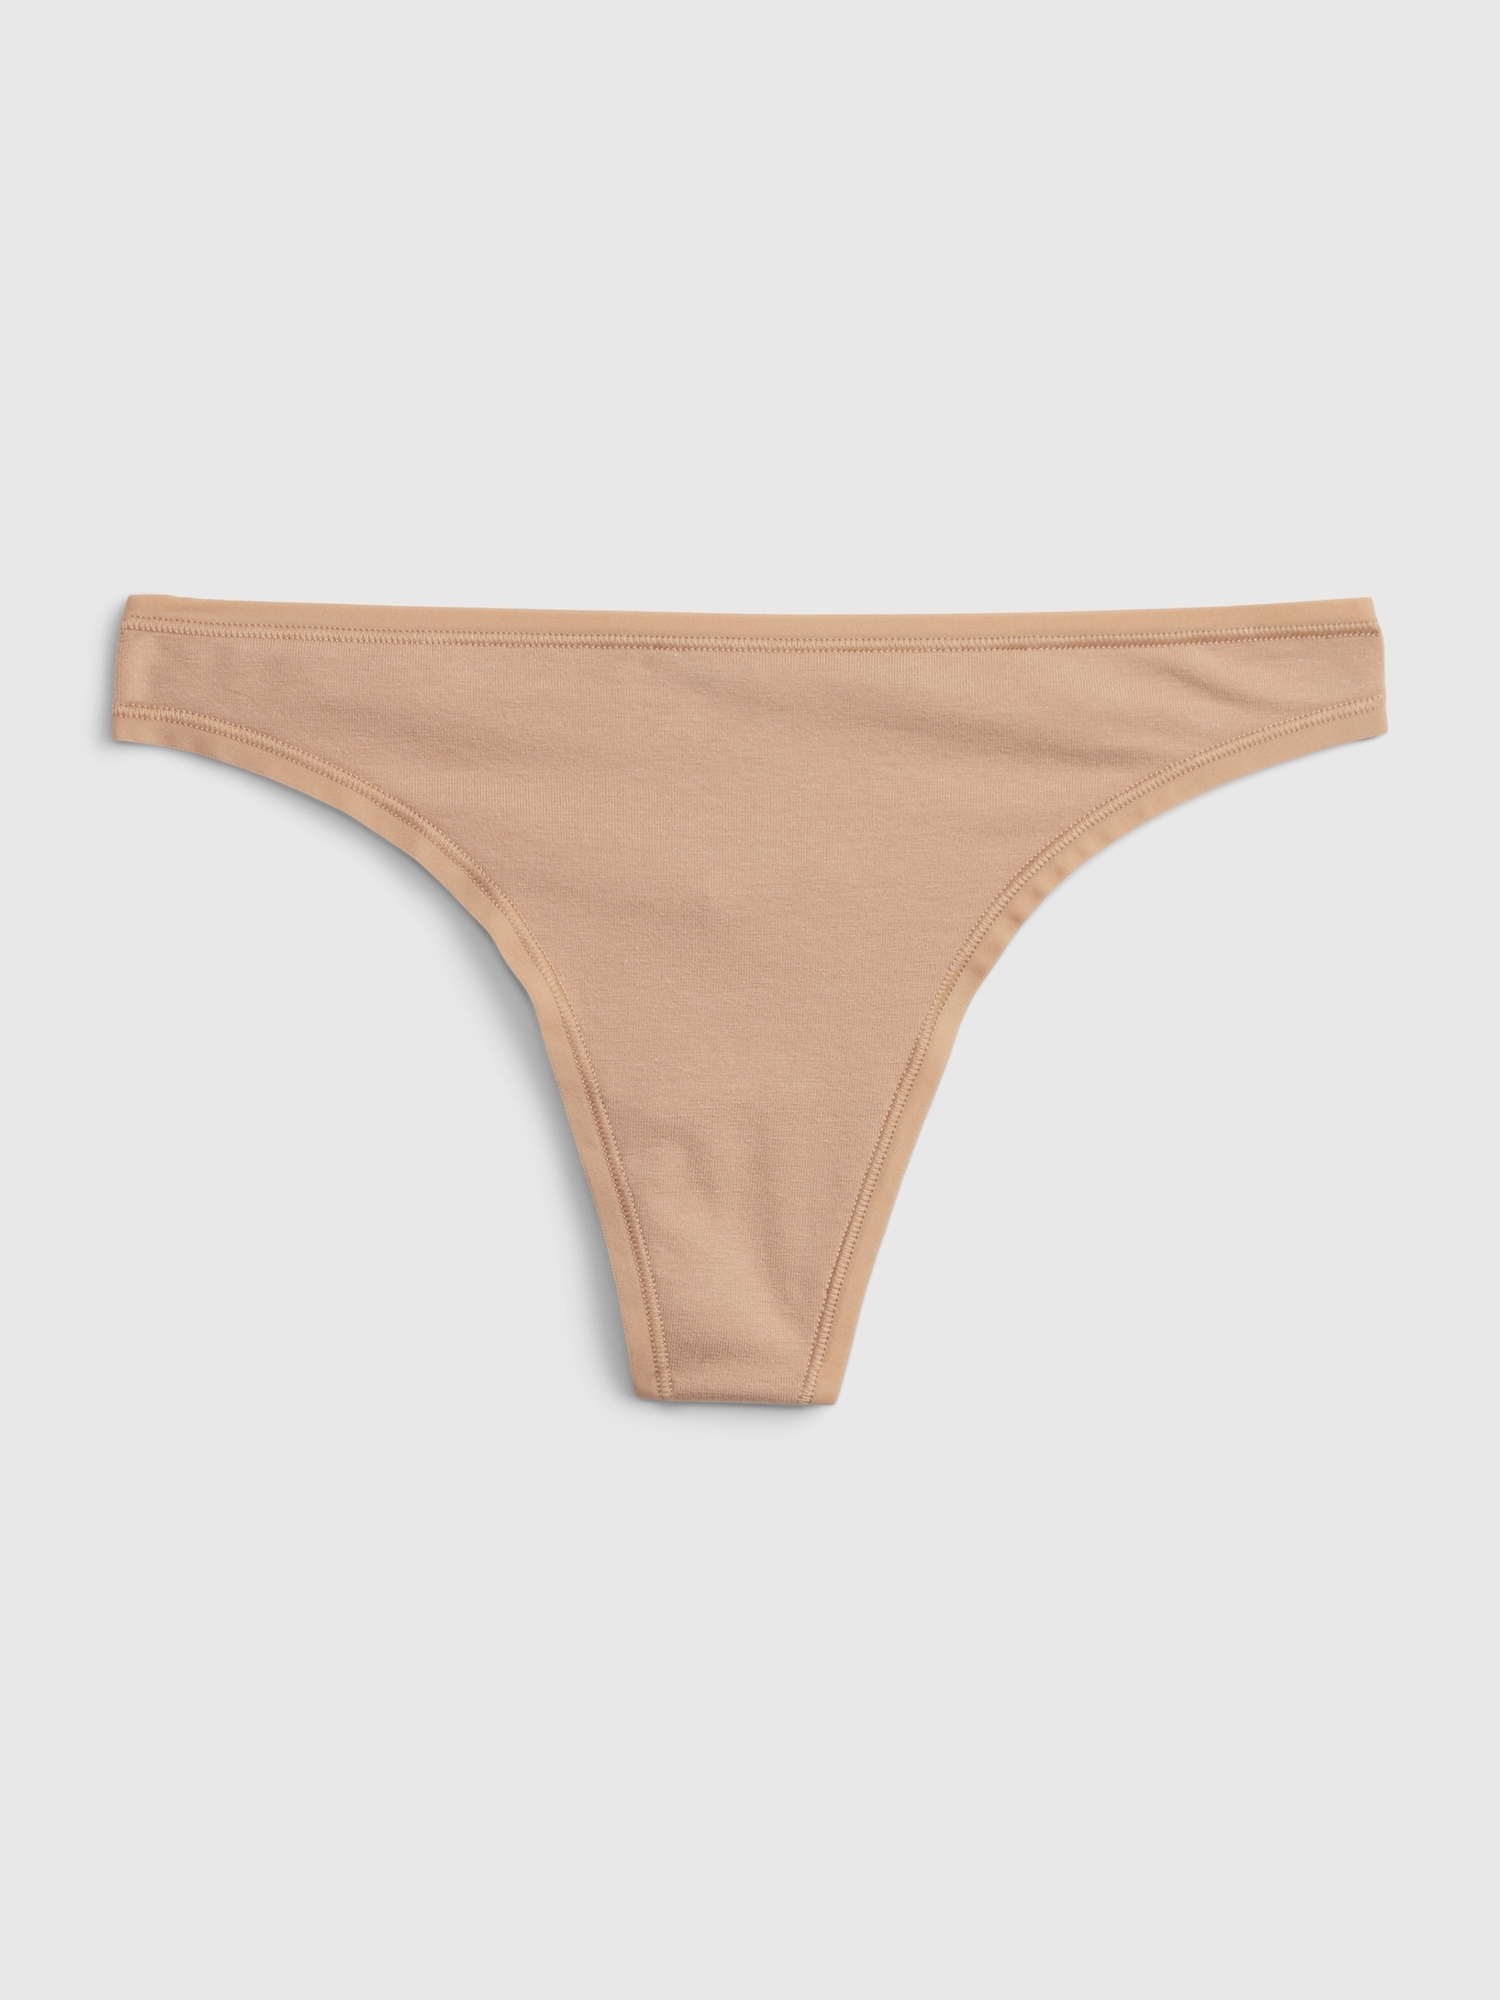 Jersey Cotton Thong, Stretch Jerseys Underwear, Comfortable Thong